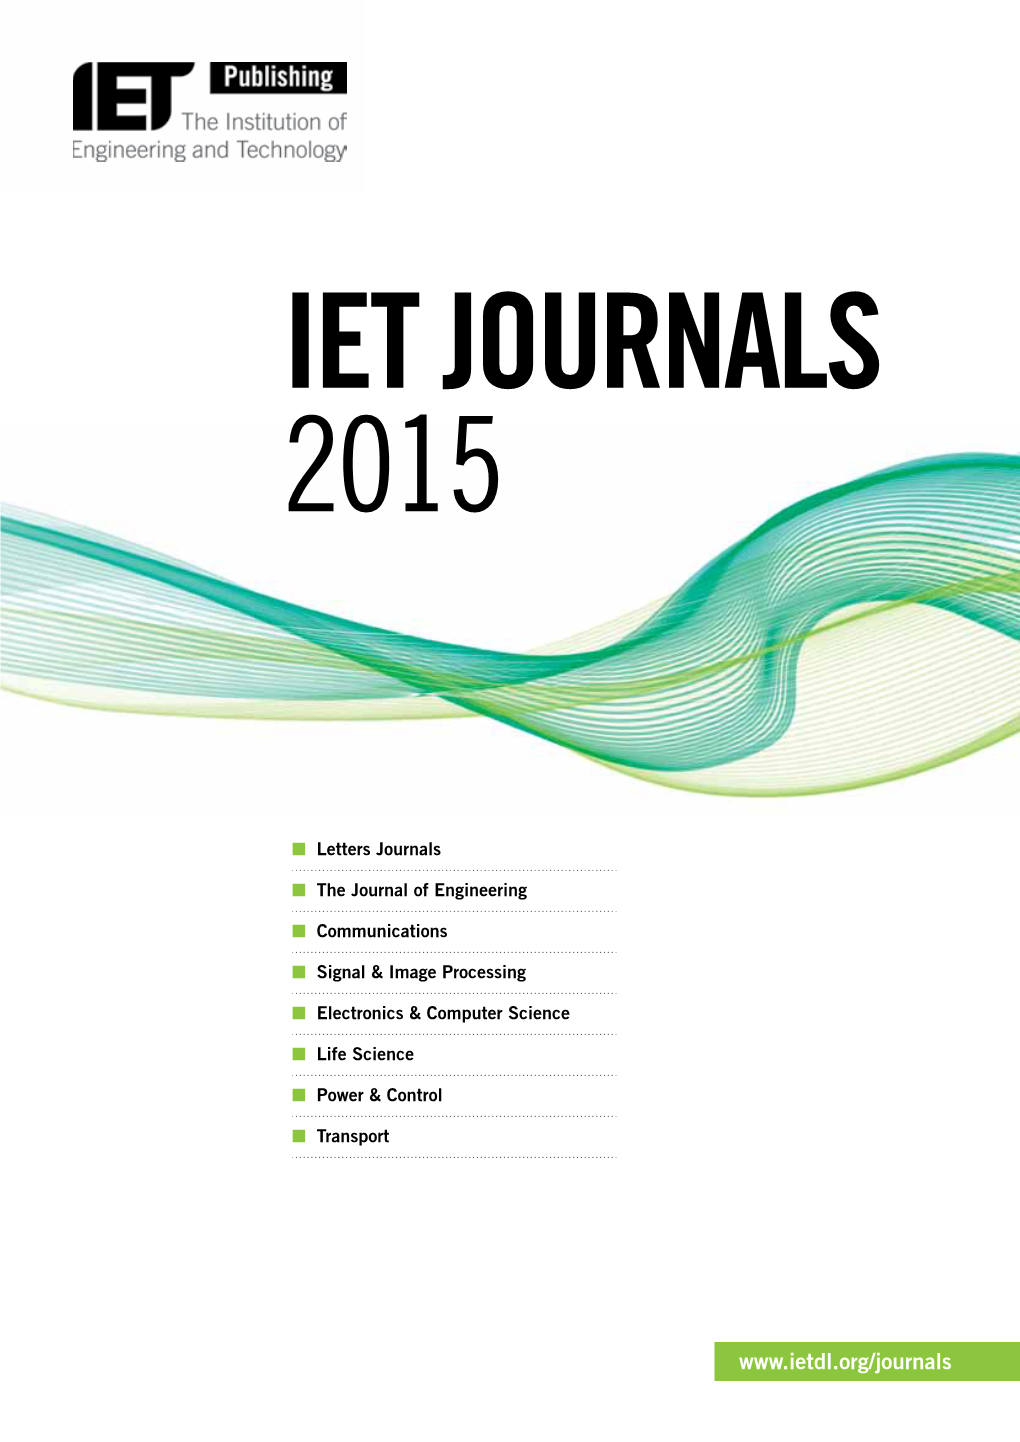 Download the 2015 IET Journals Catalogue